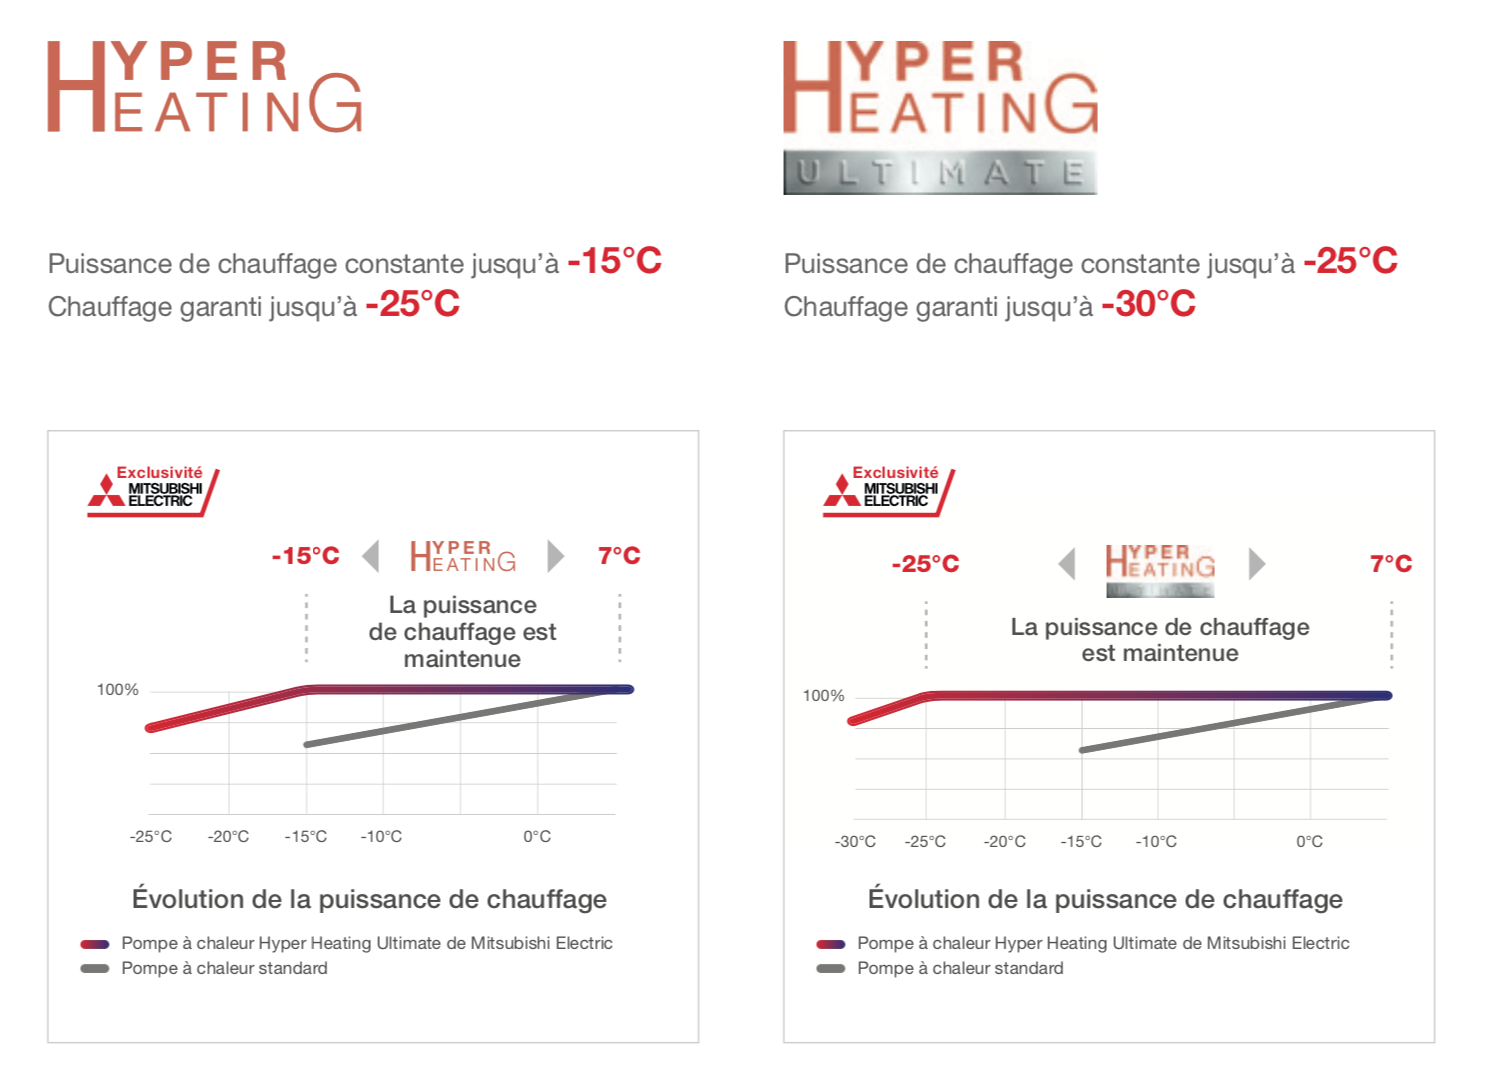 Comparatif Hyper Heating et Hyper Heating Ultimate